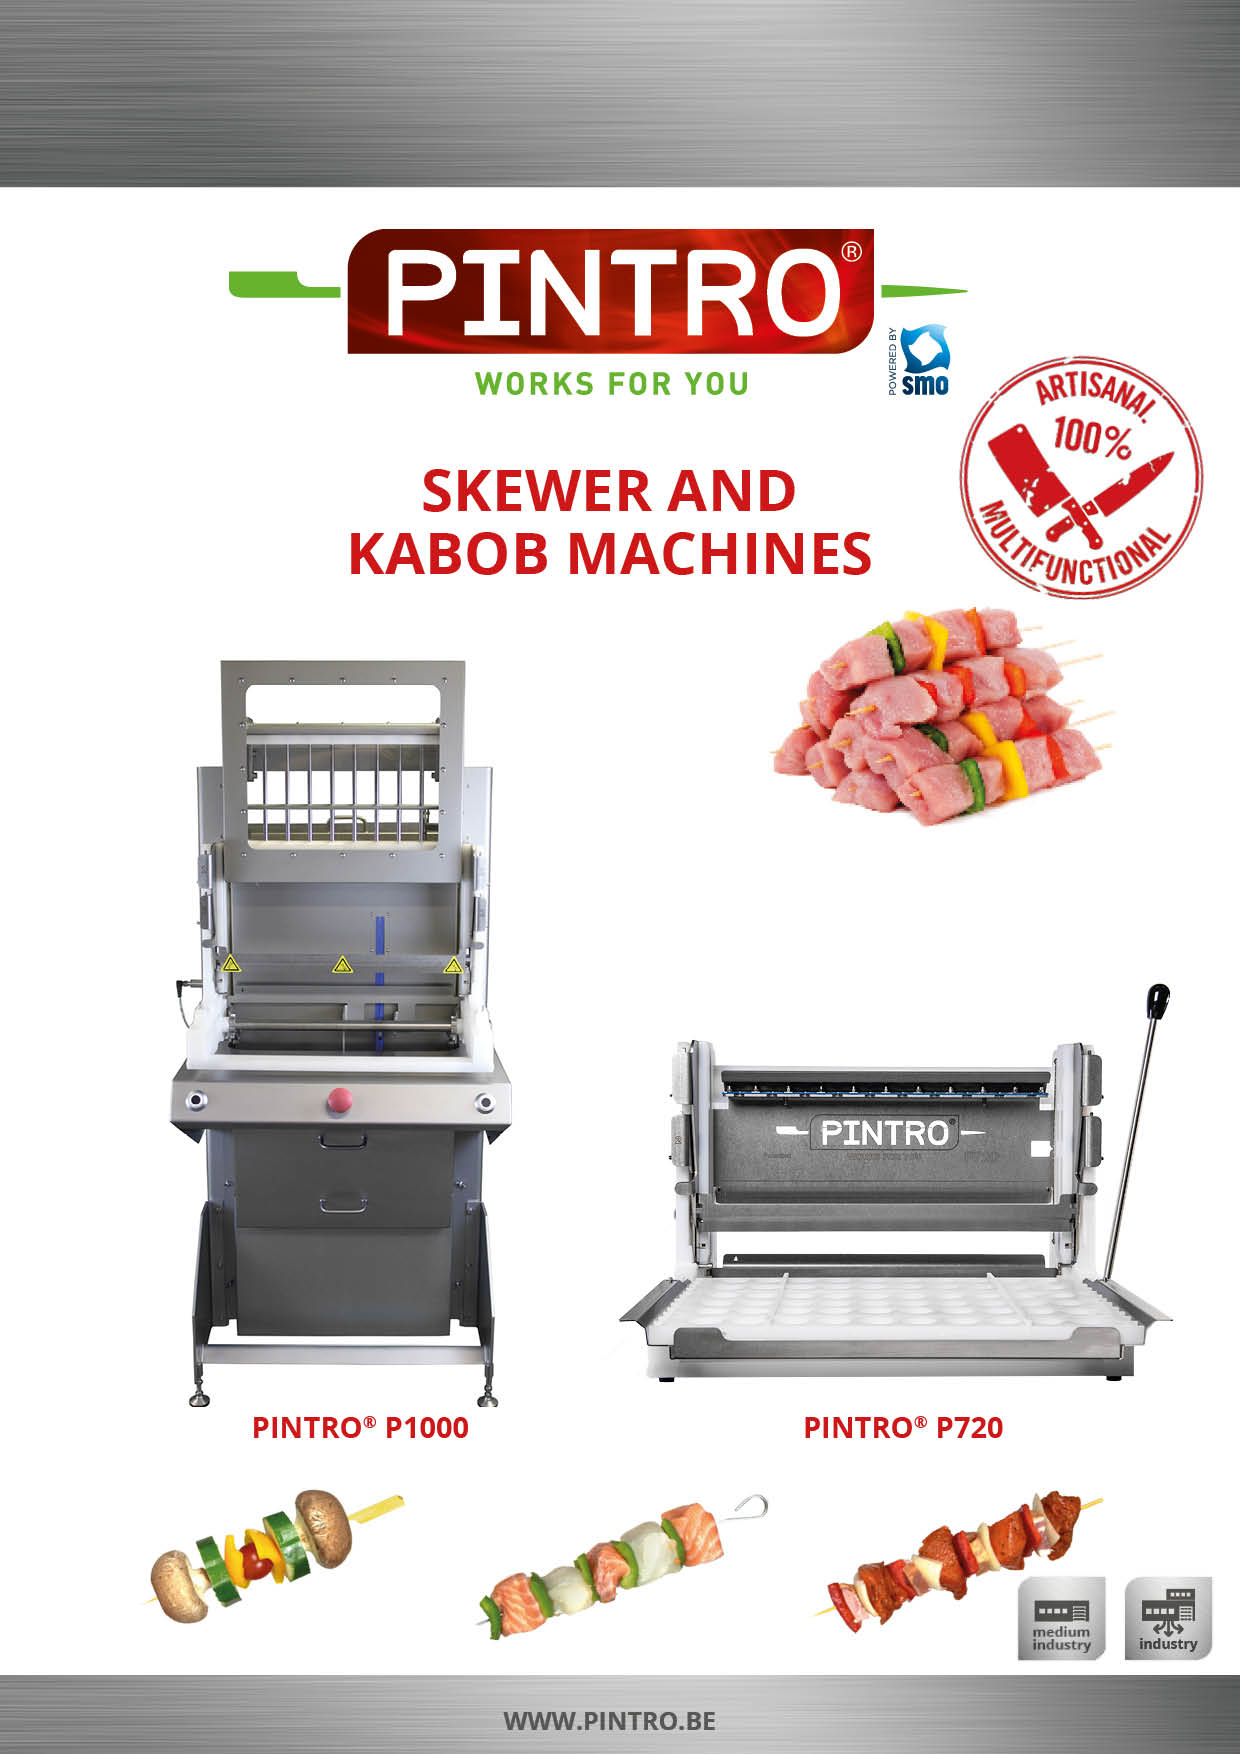 PINTRO manual and semi automatic skewering machines